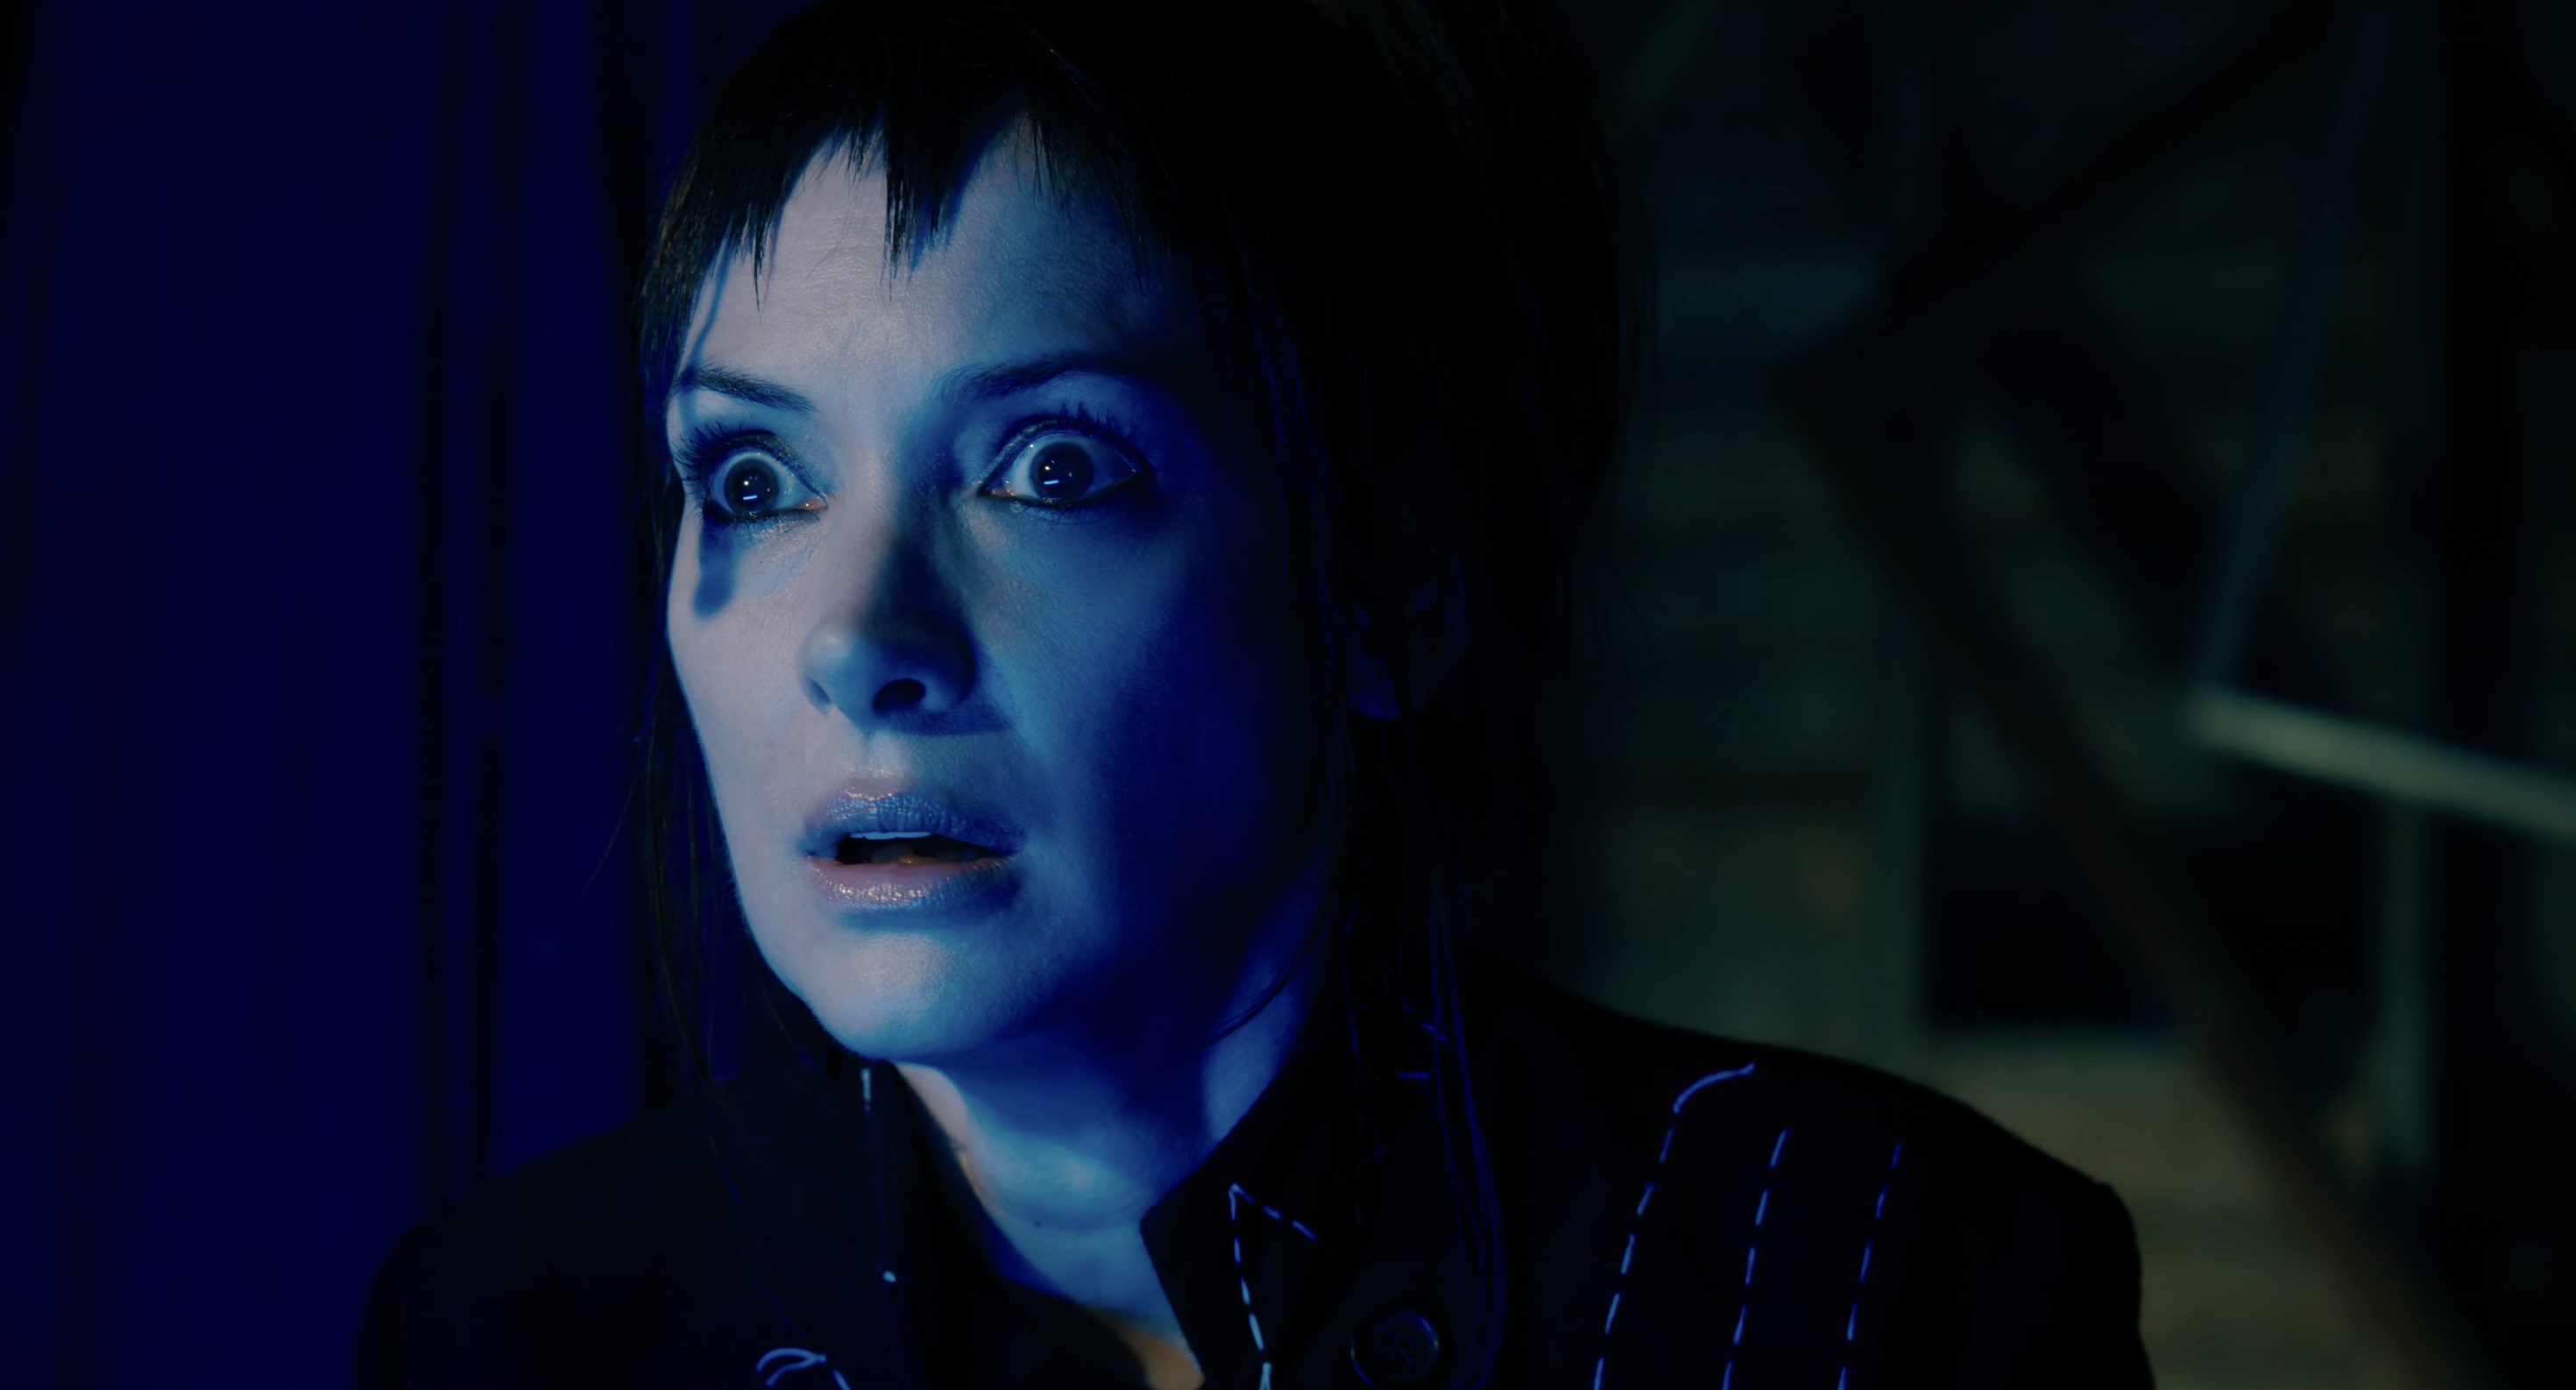 Lydia is in a dark setting, looking surprised or alarmed